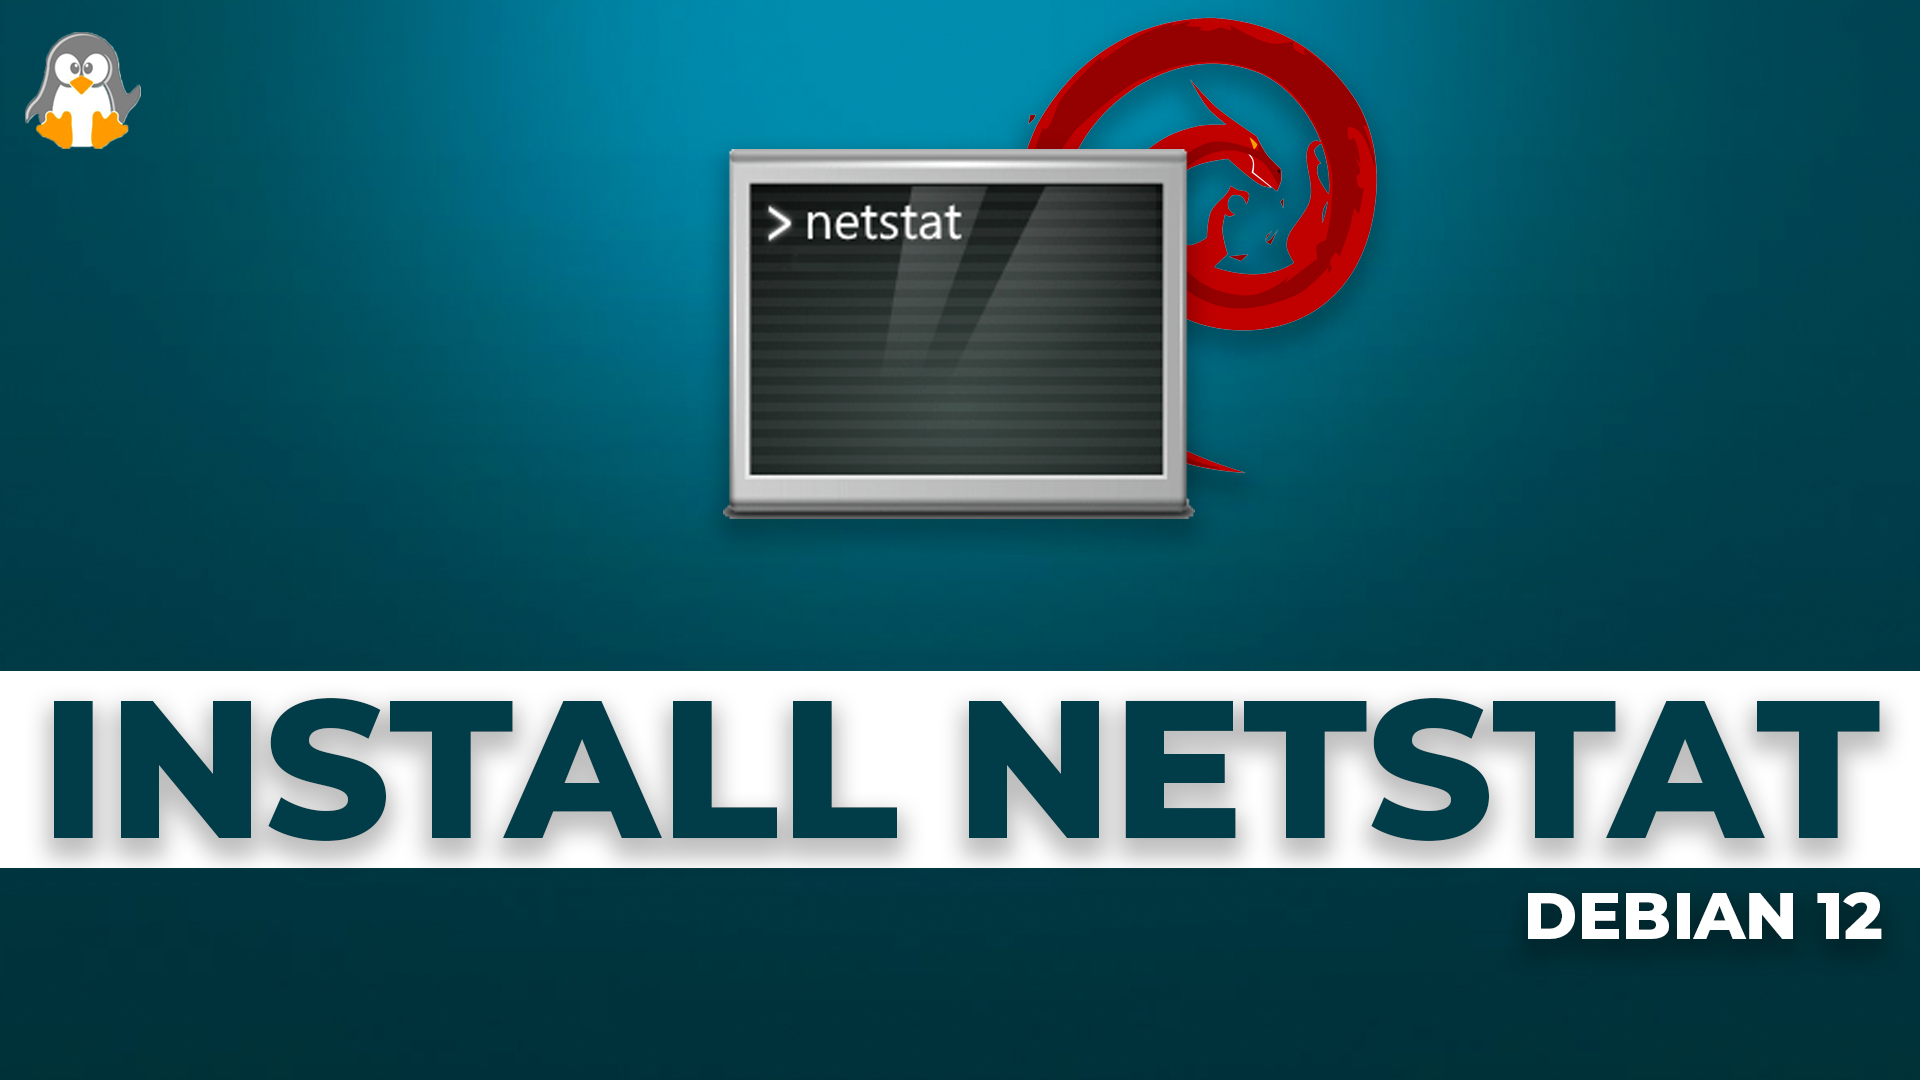 How to Install netstat on Debian 12?